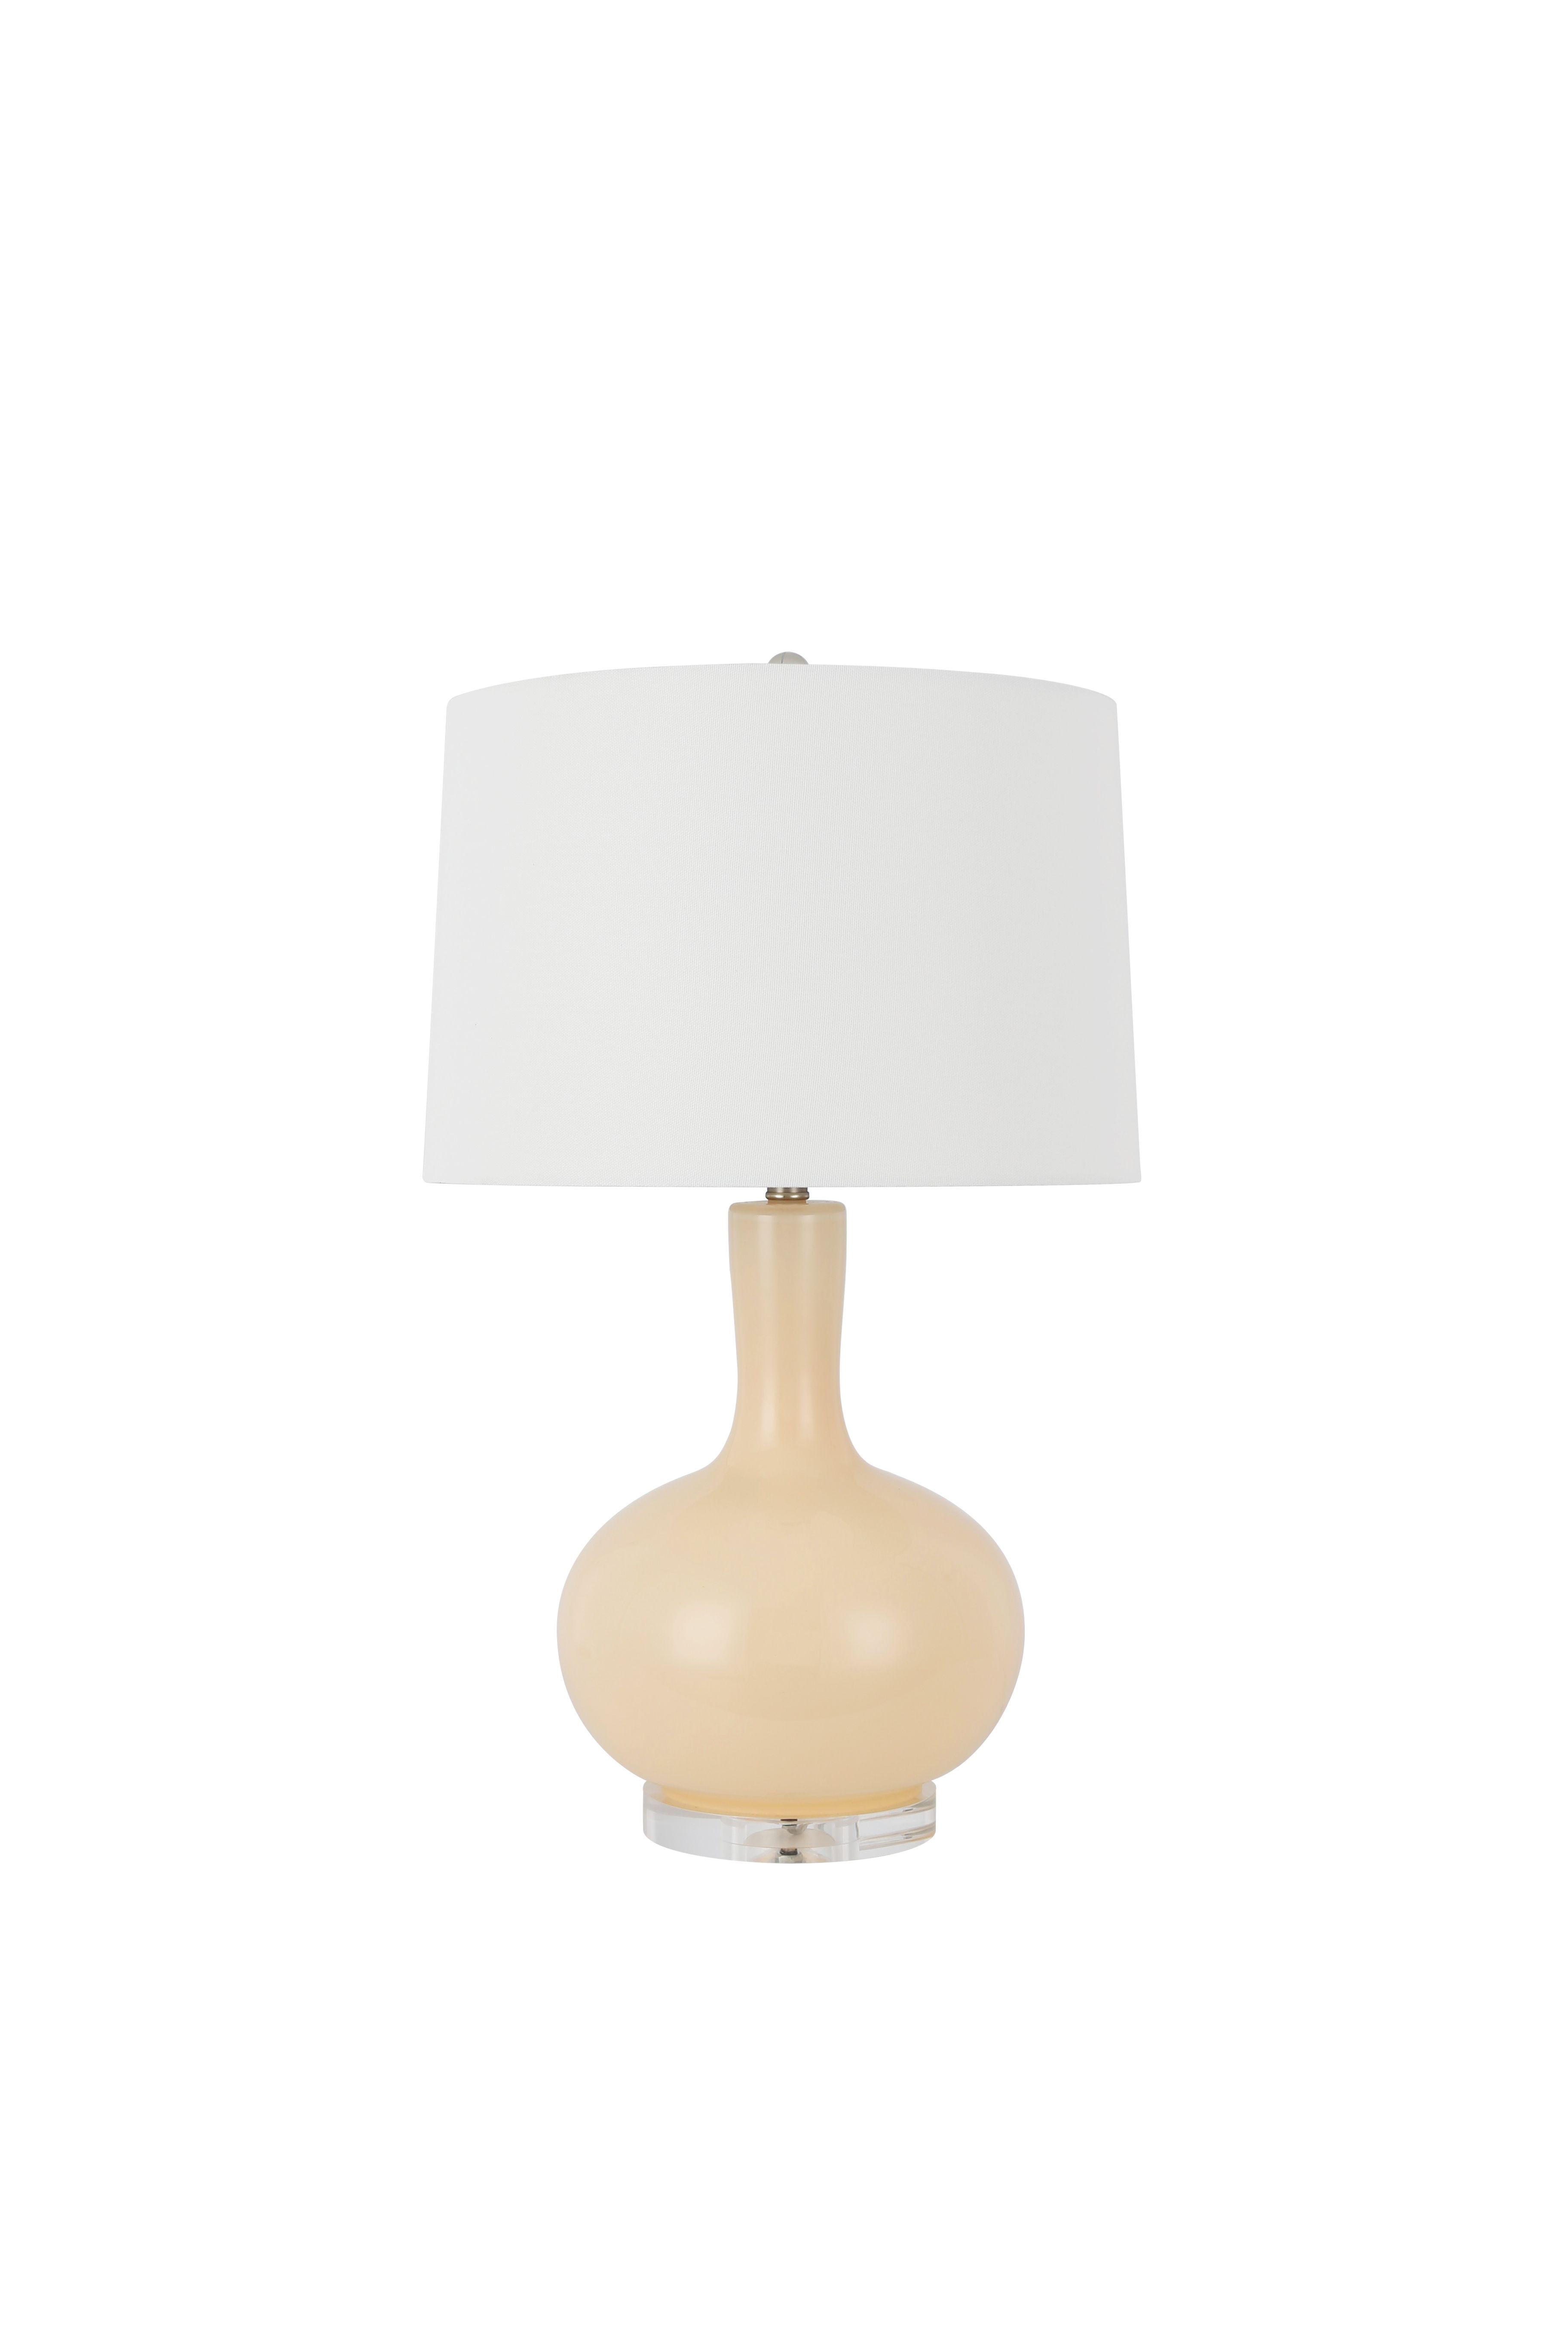 European Elegant design table lamp living room ceramic antique vase lamp for wholesale smart table lamp